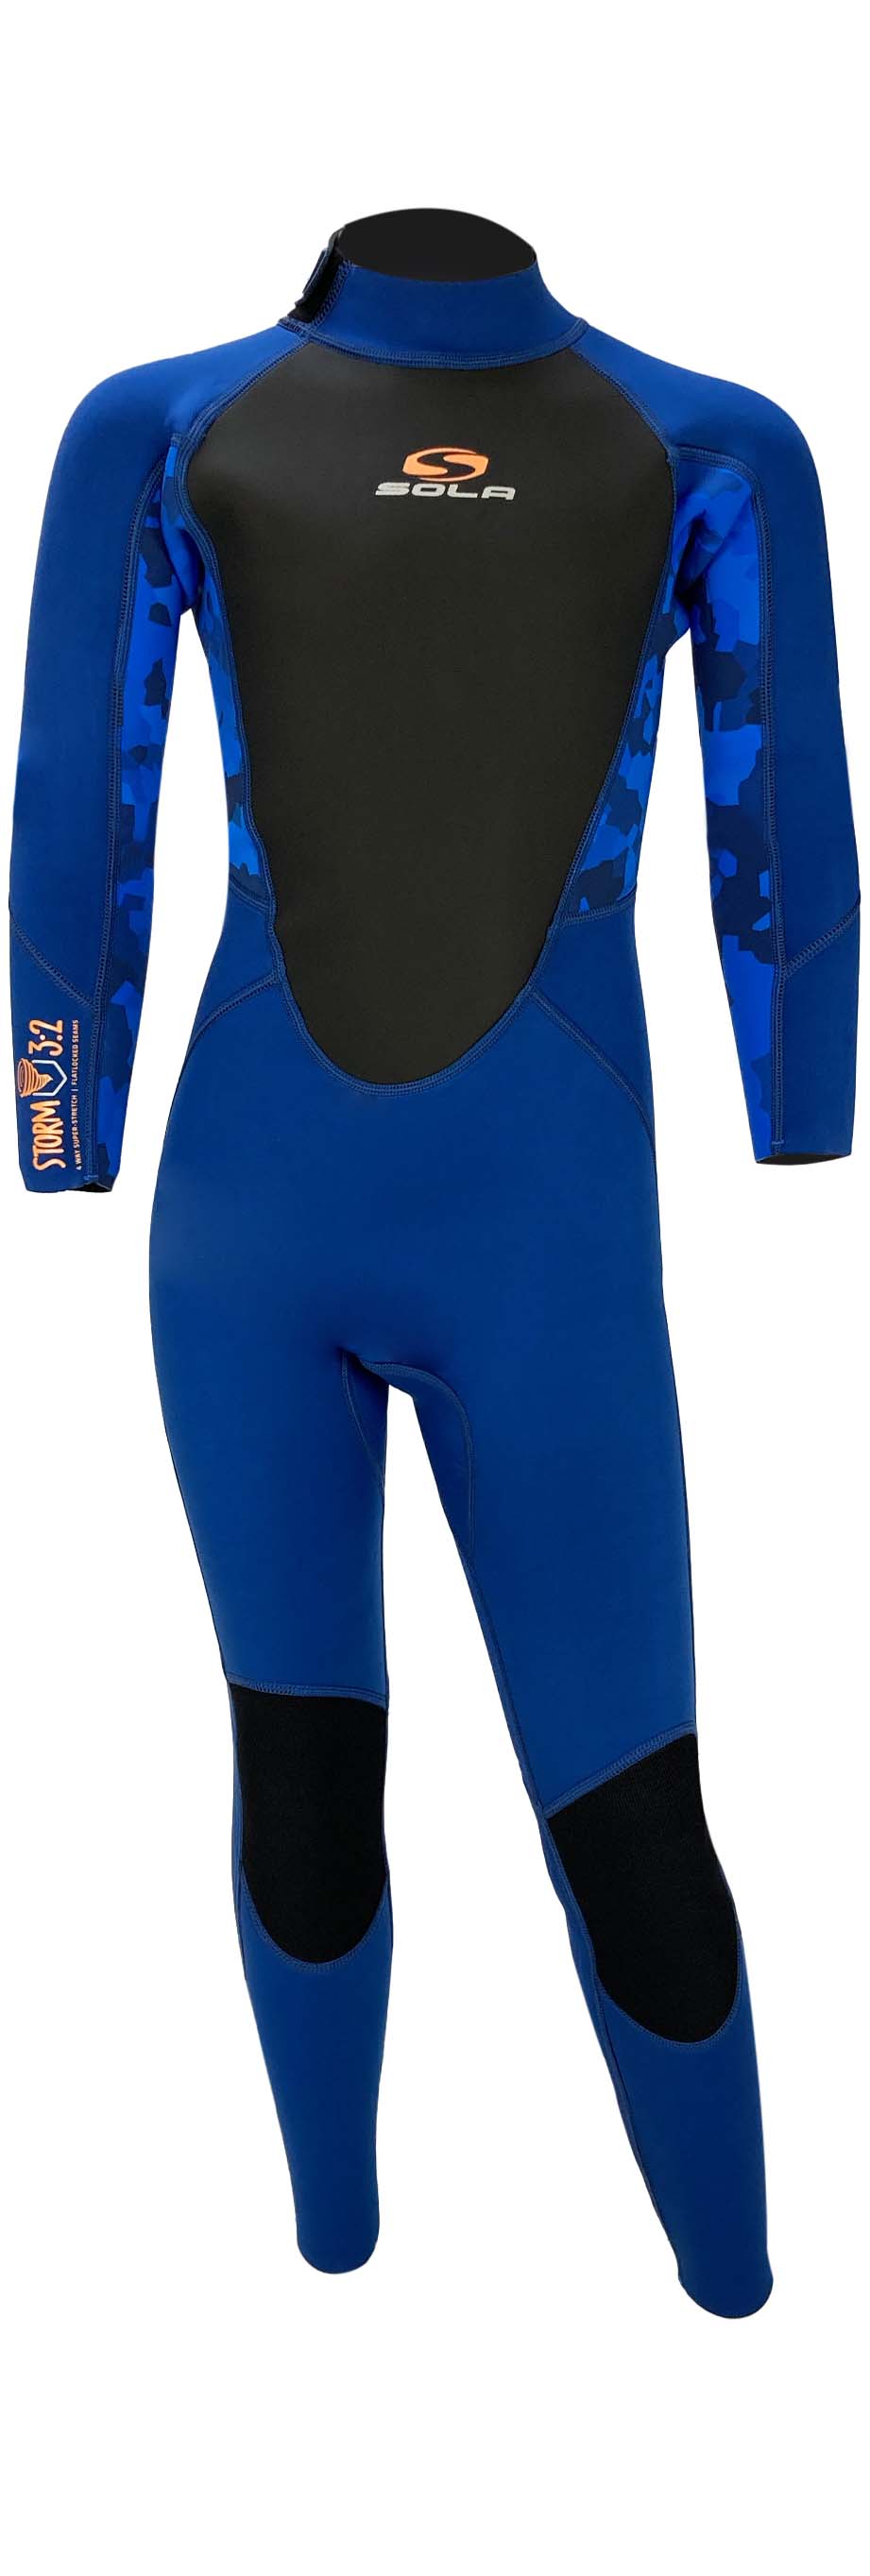 Sola Storm Kids 3/2mm Full Wetsuit - Blue/Camo - A1713